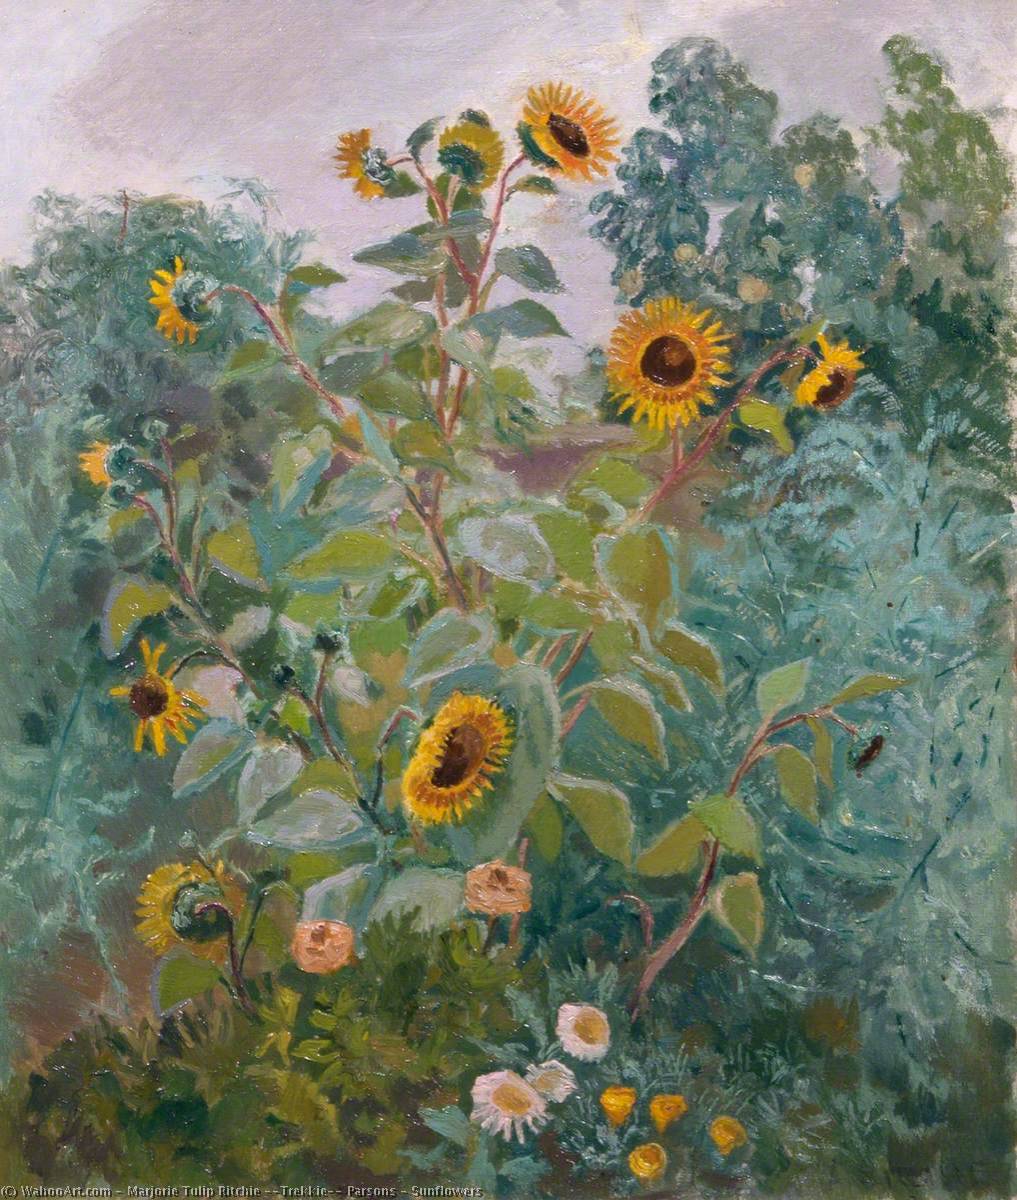 Sunflowers by Marjorie Tulip Ritchie (Trekkie) Parsons Marjorie Tulip Ritchie (Trekkie) Parsons | ArtsDot.com